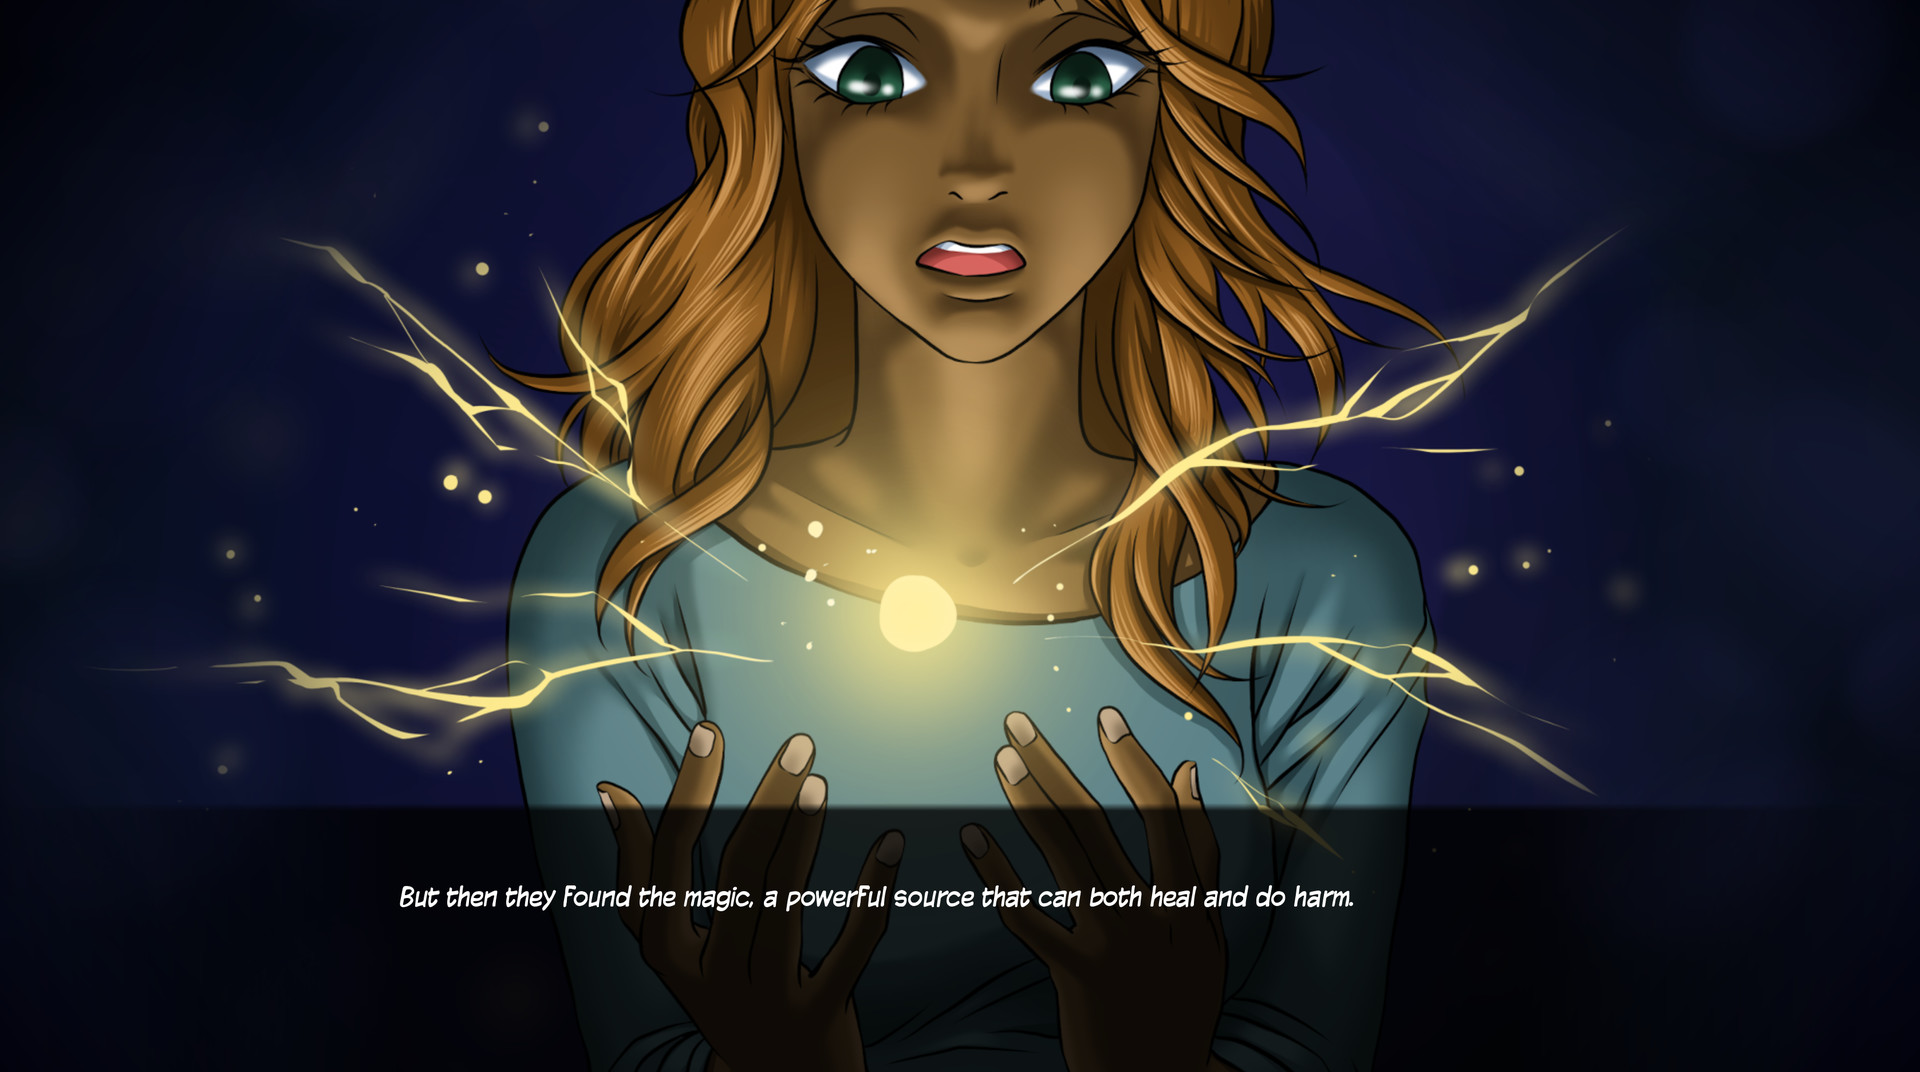 Sword Princess Amaltea - The Visual Novel Free Download